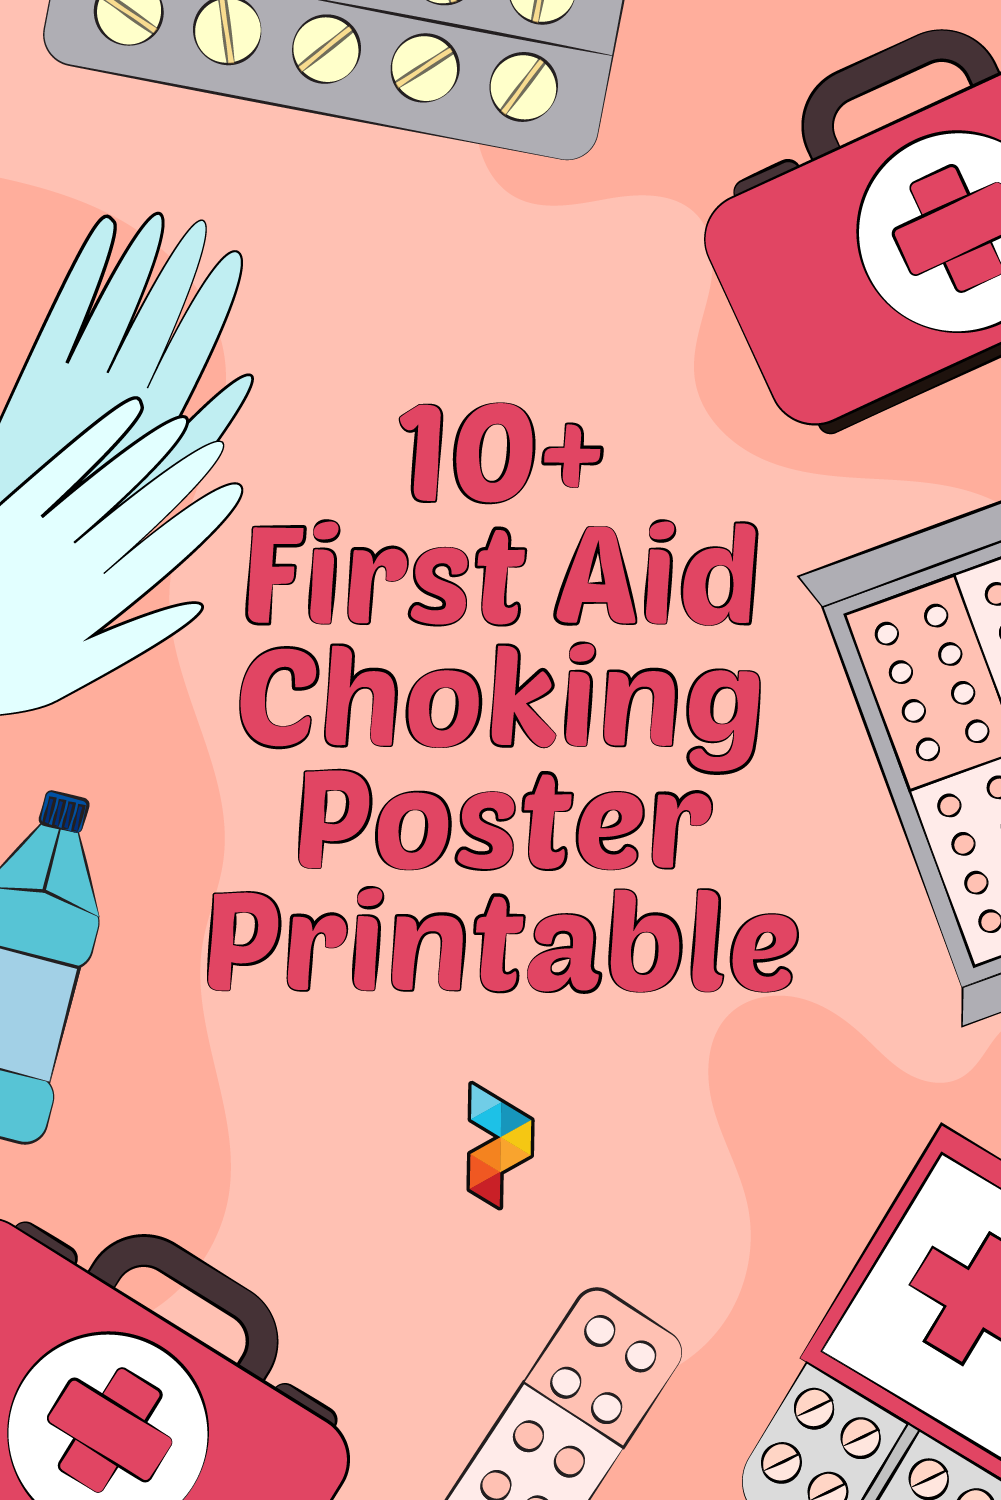 First Aid Choking Poster